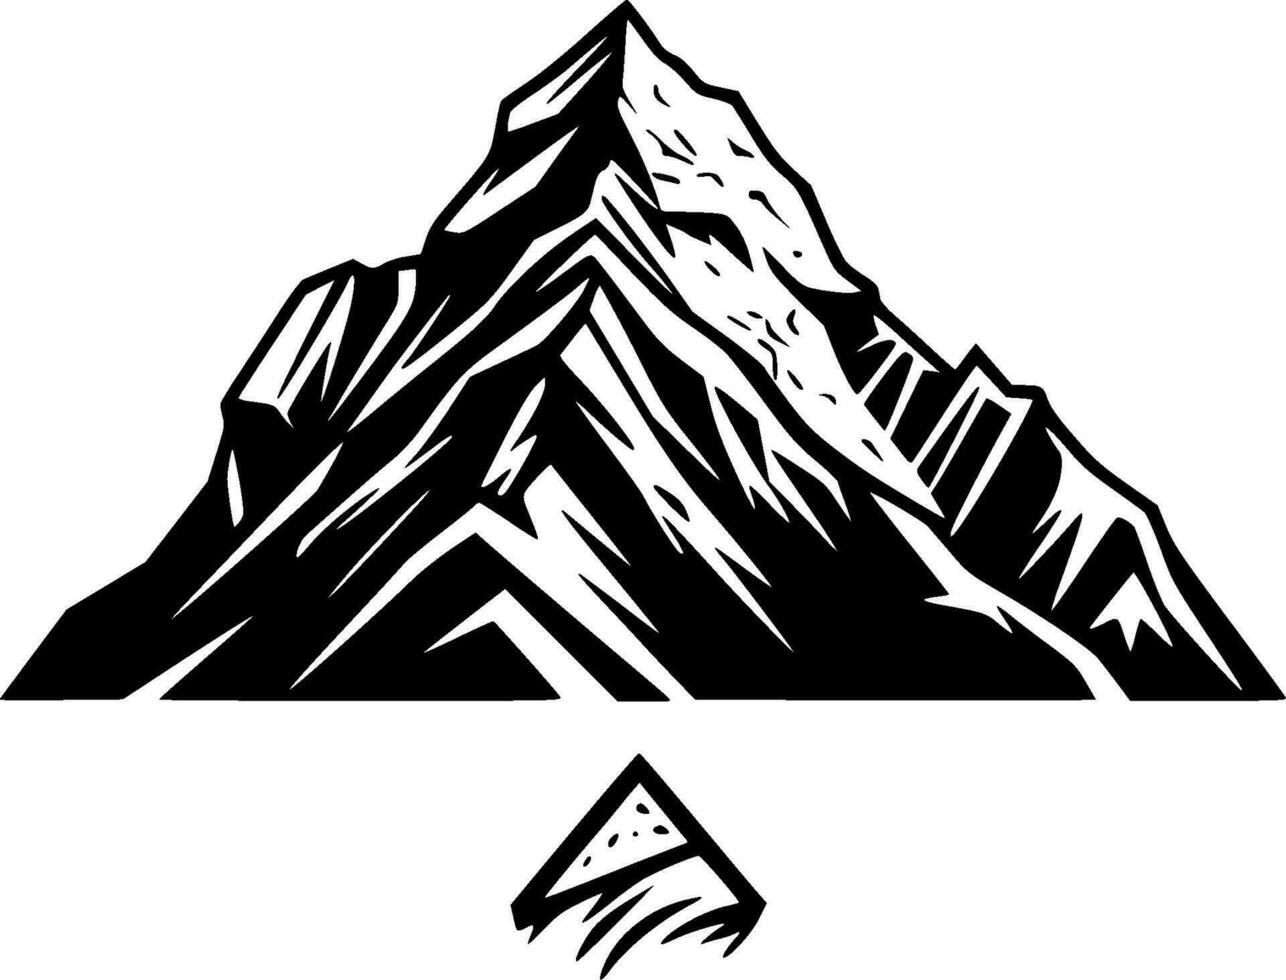 Mountain Range, Black and White Vector illustration